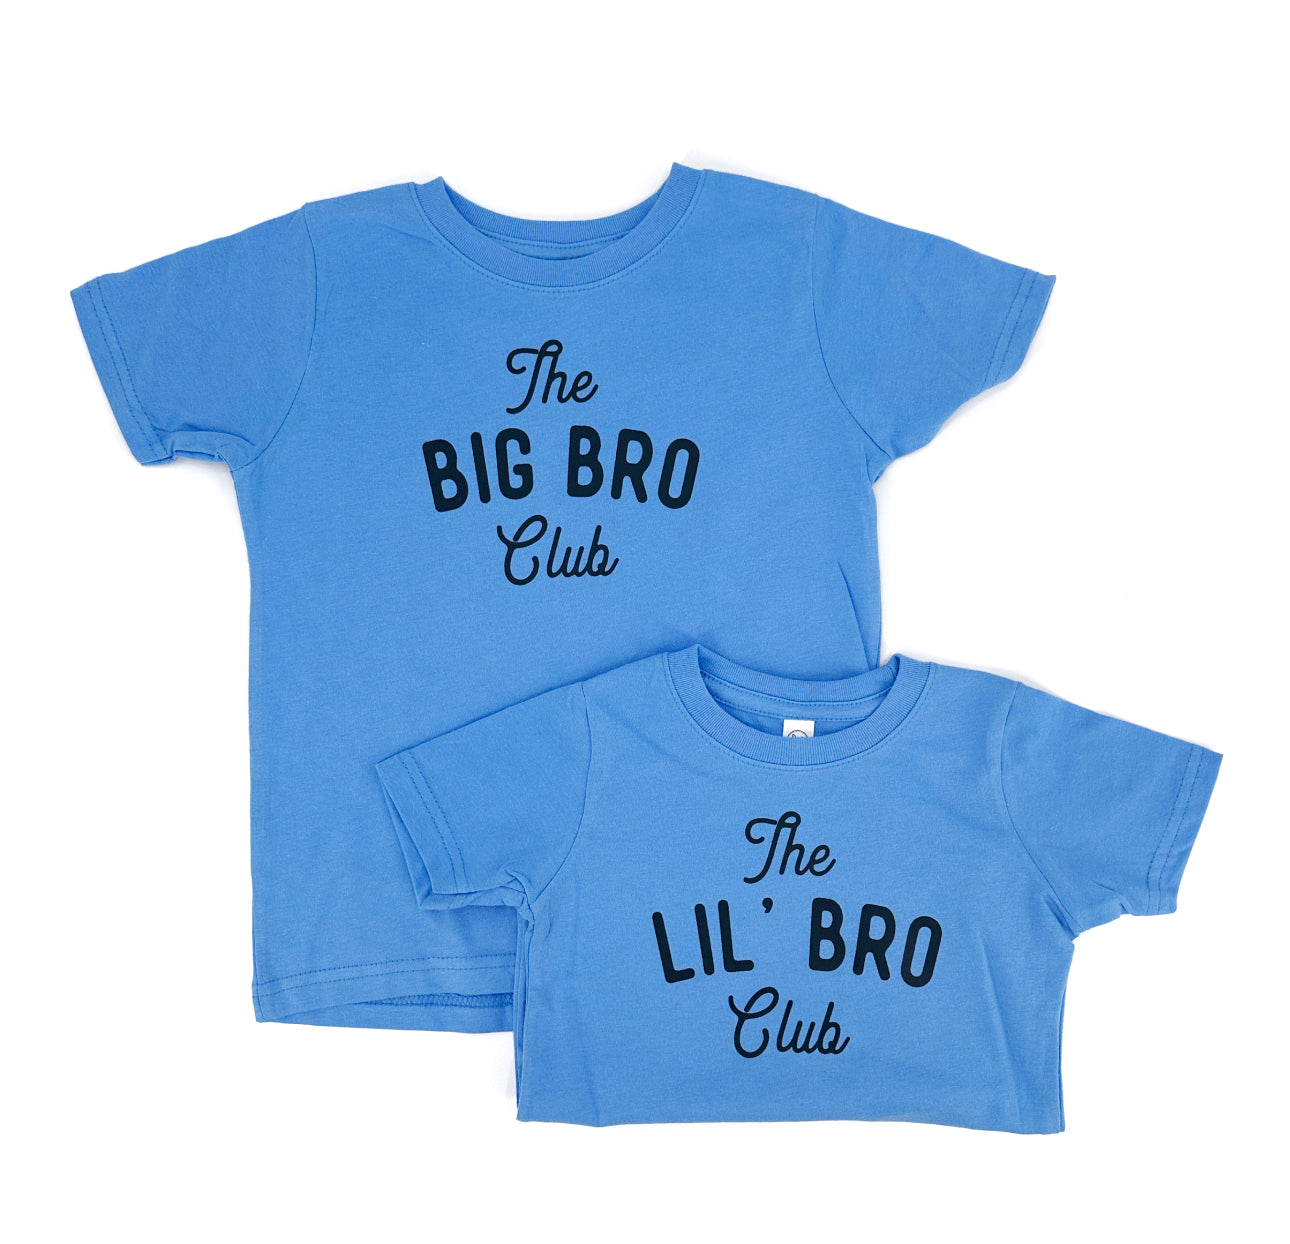 Big Bro Club, Little Bro Club